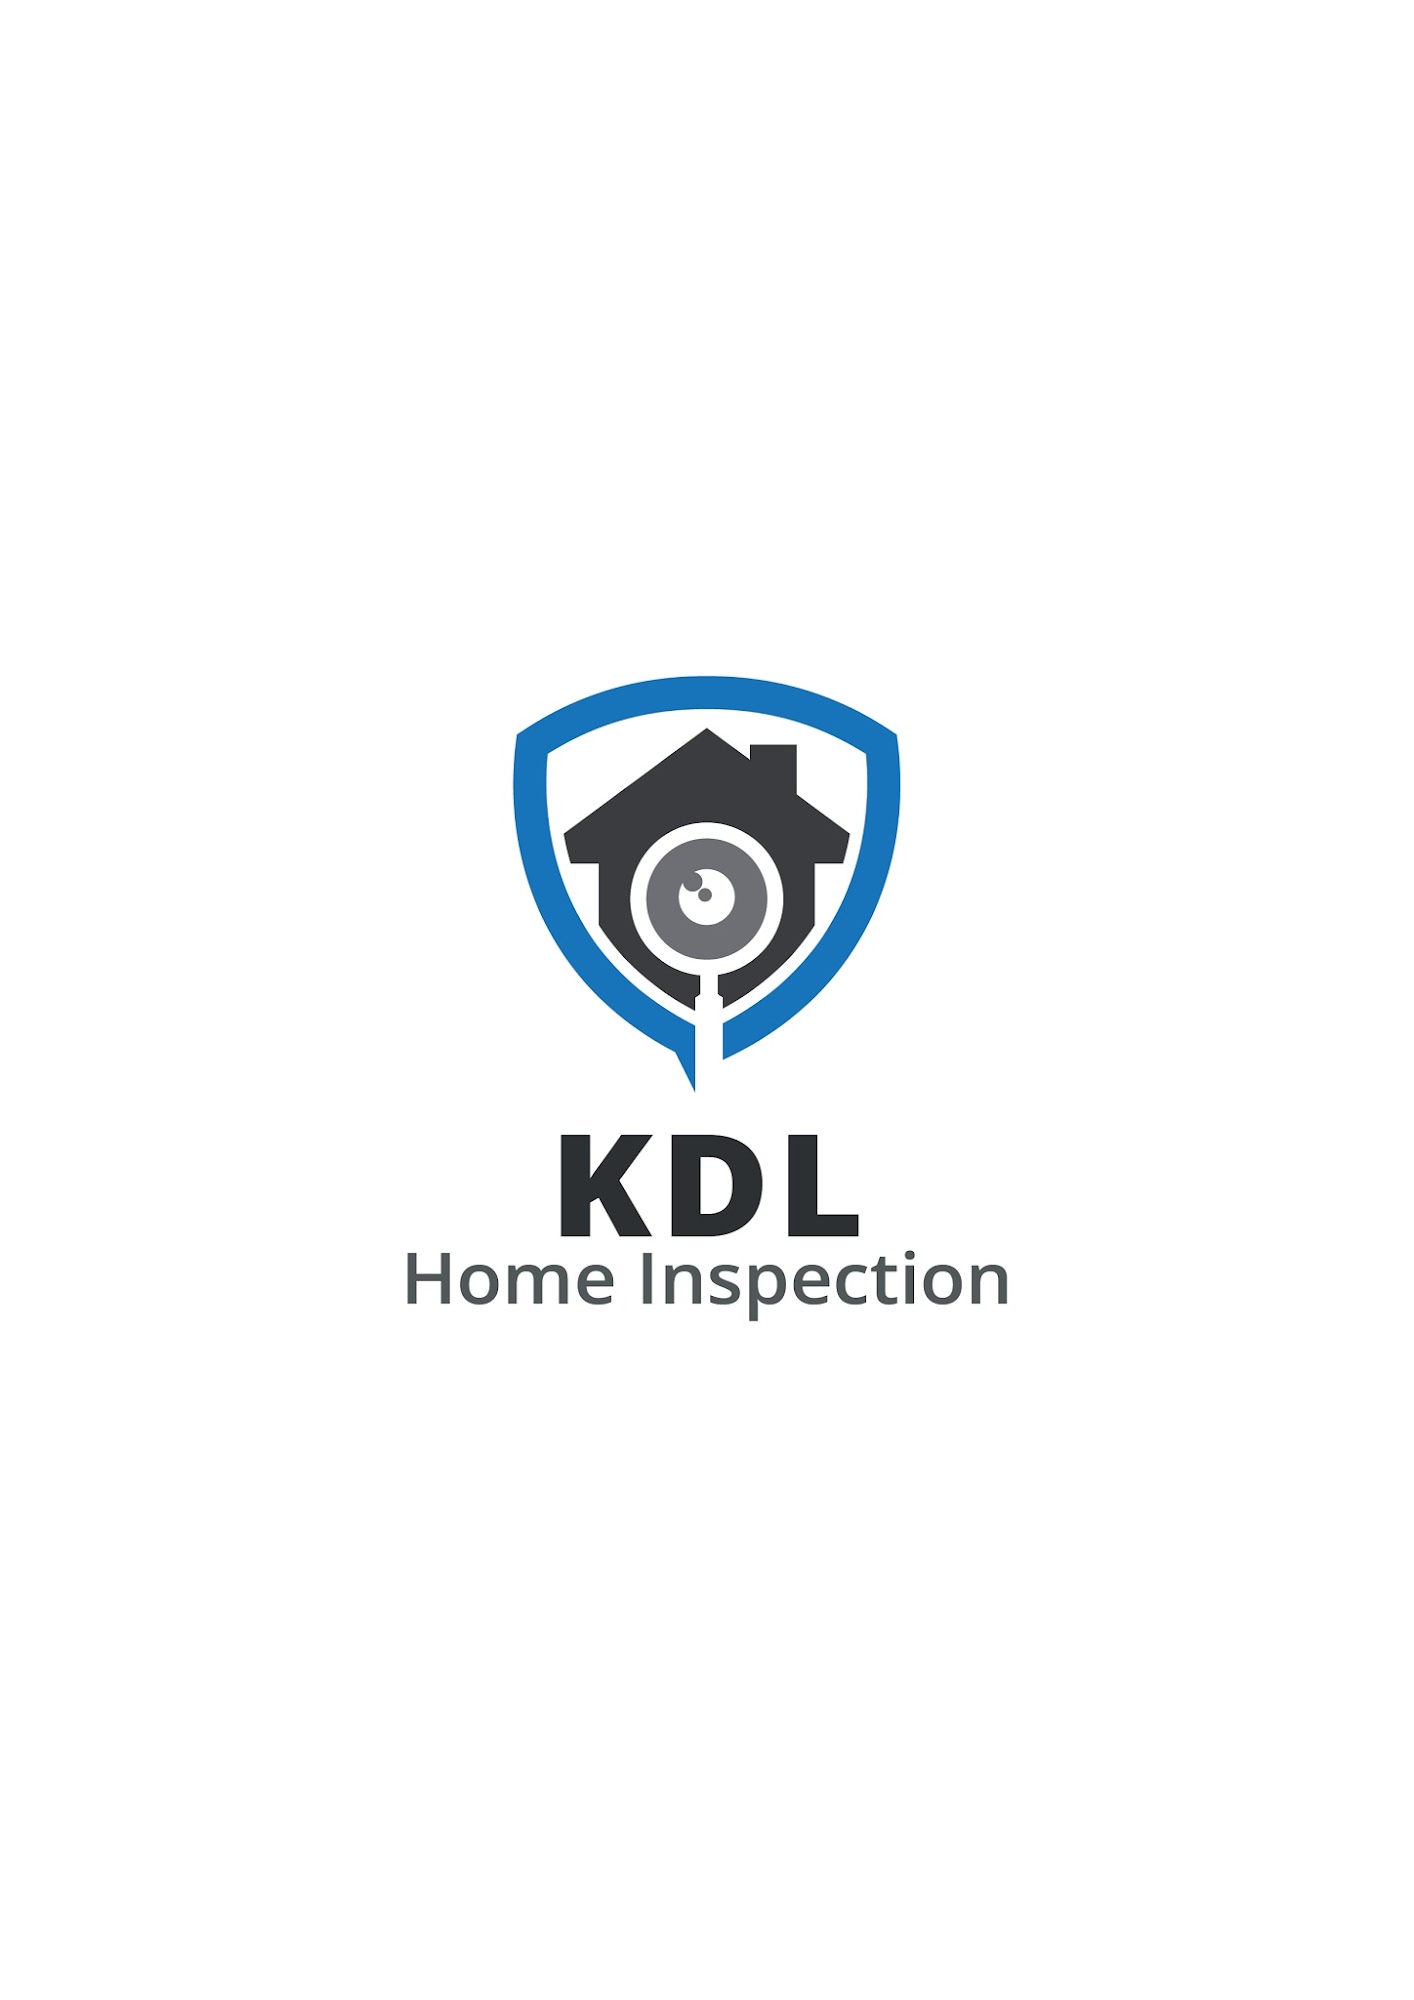 KDL Home Inspection 420 Highway W, Foristell Missouri 63348